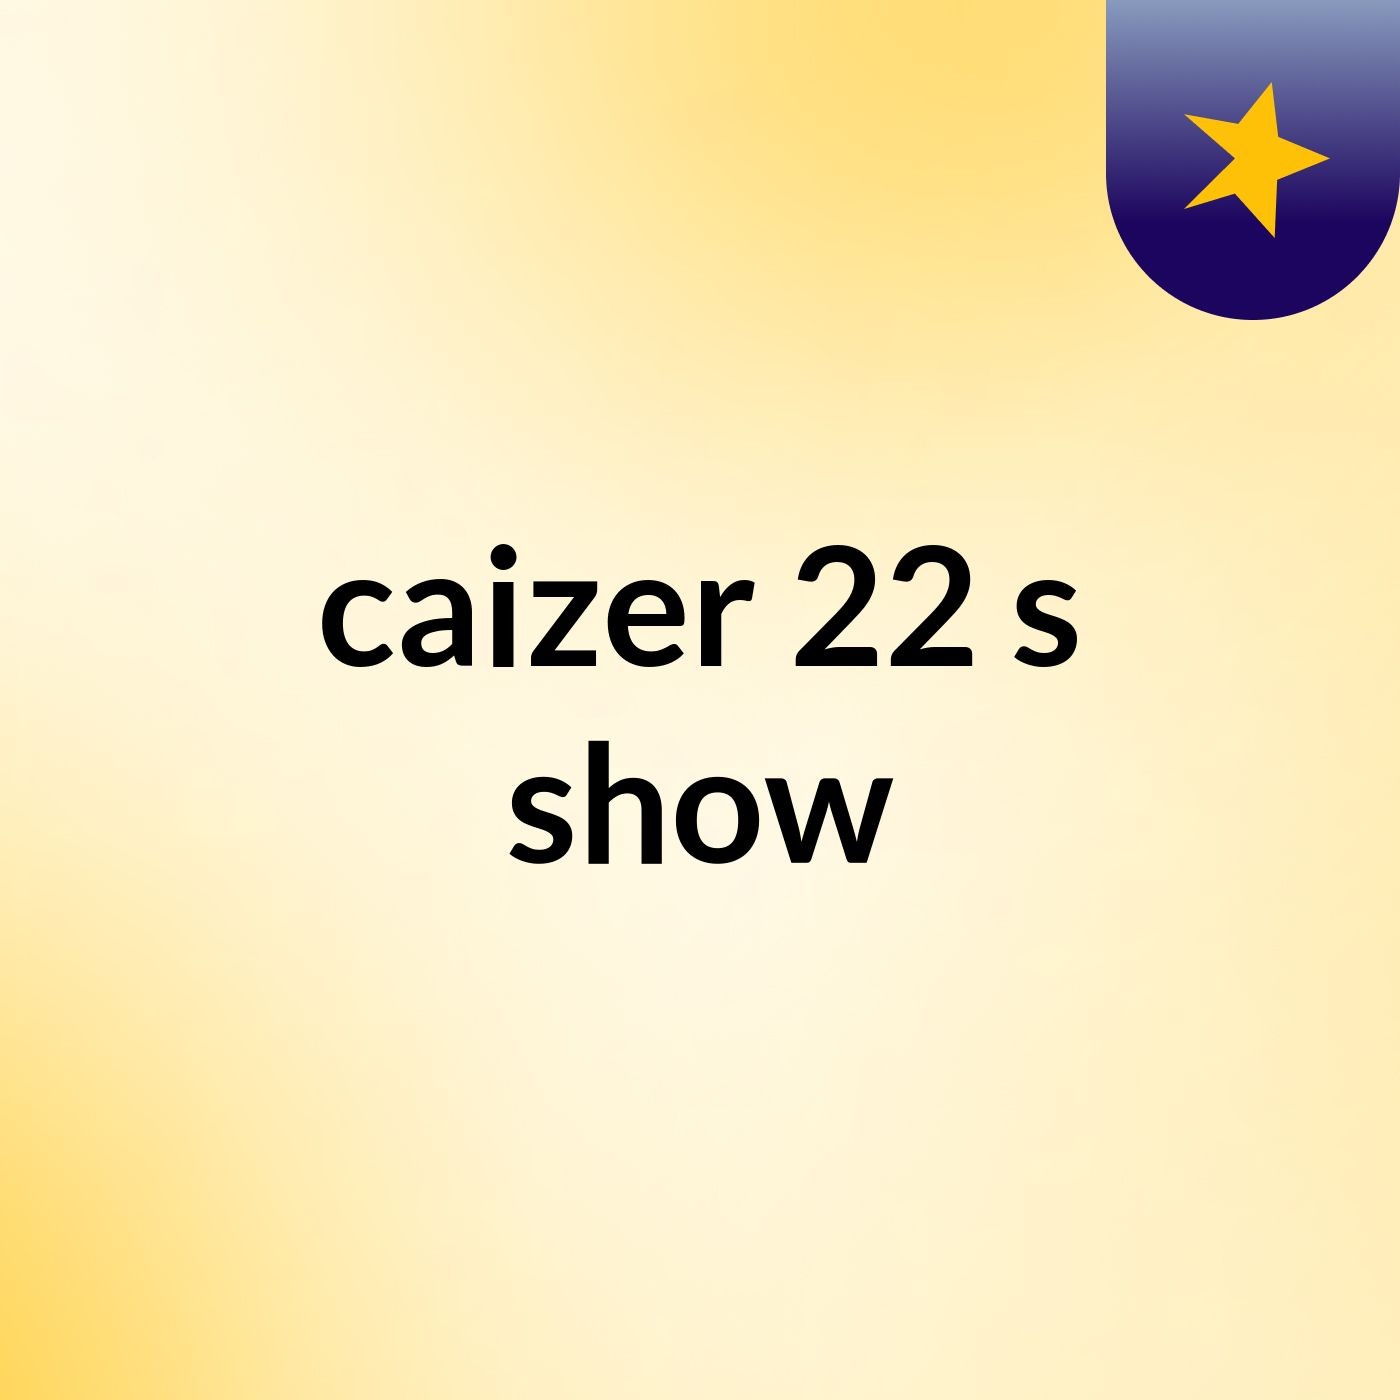 caizer 22's show